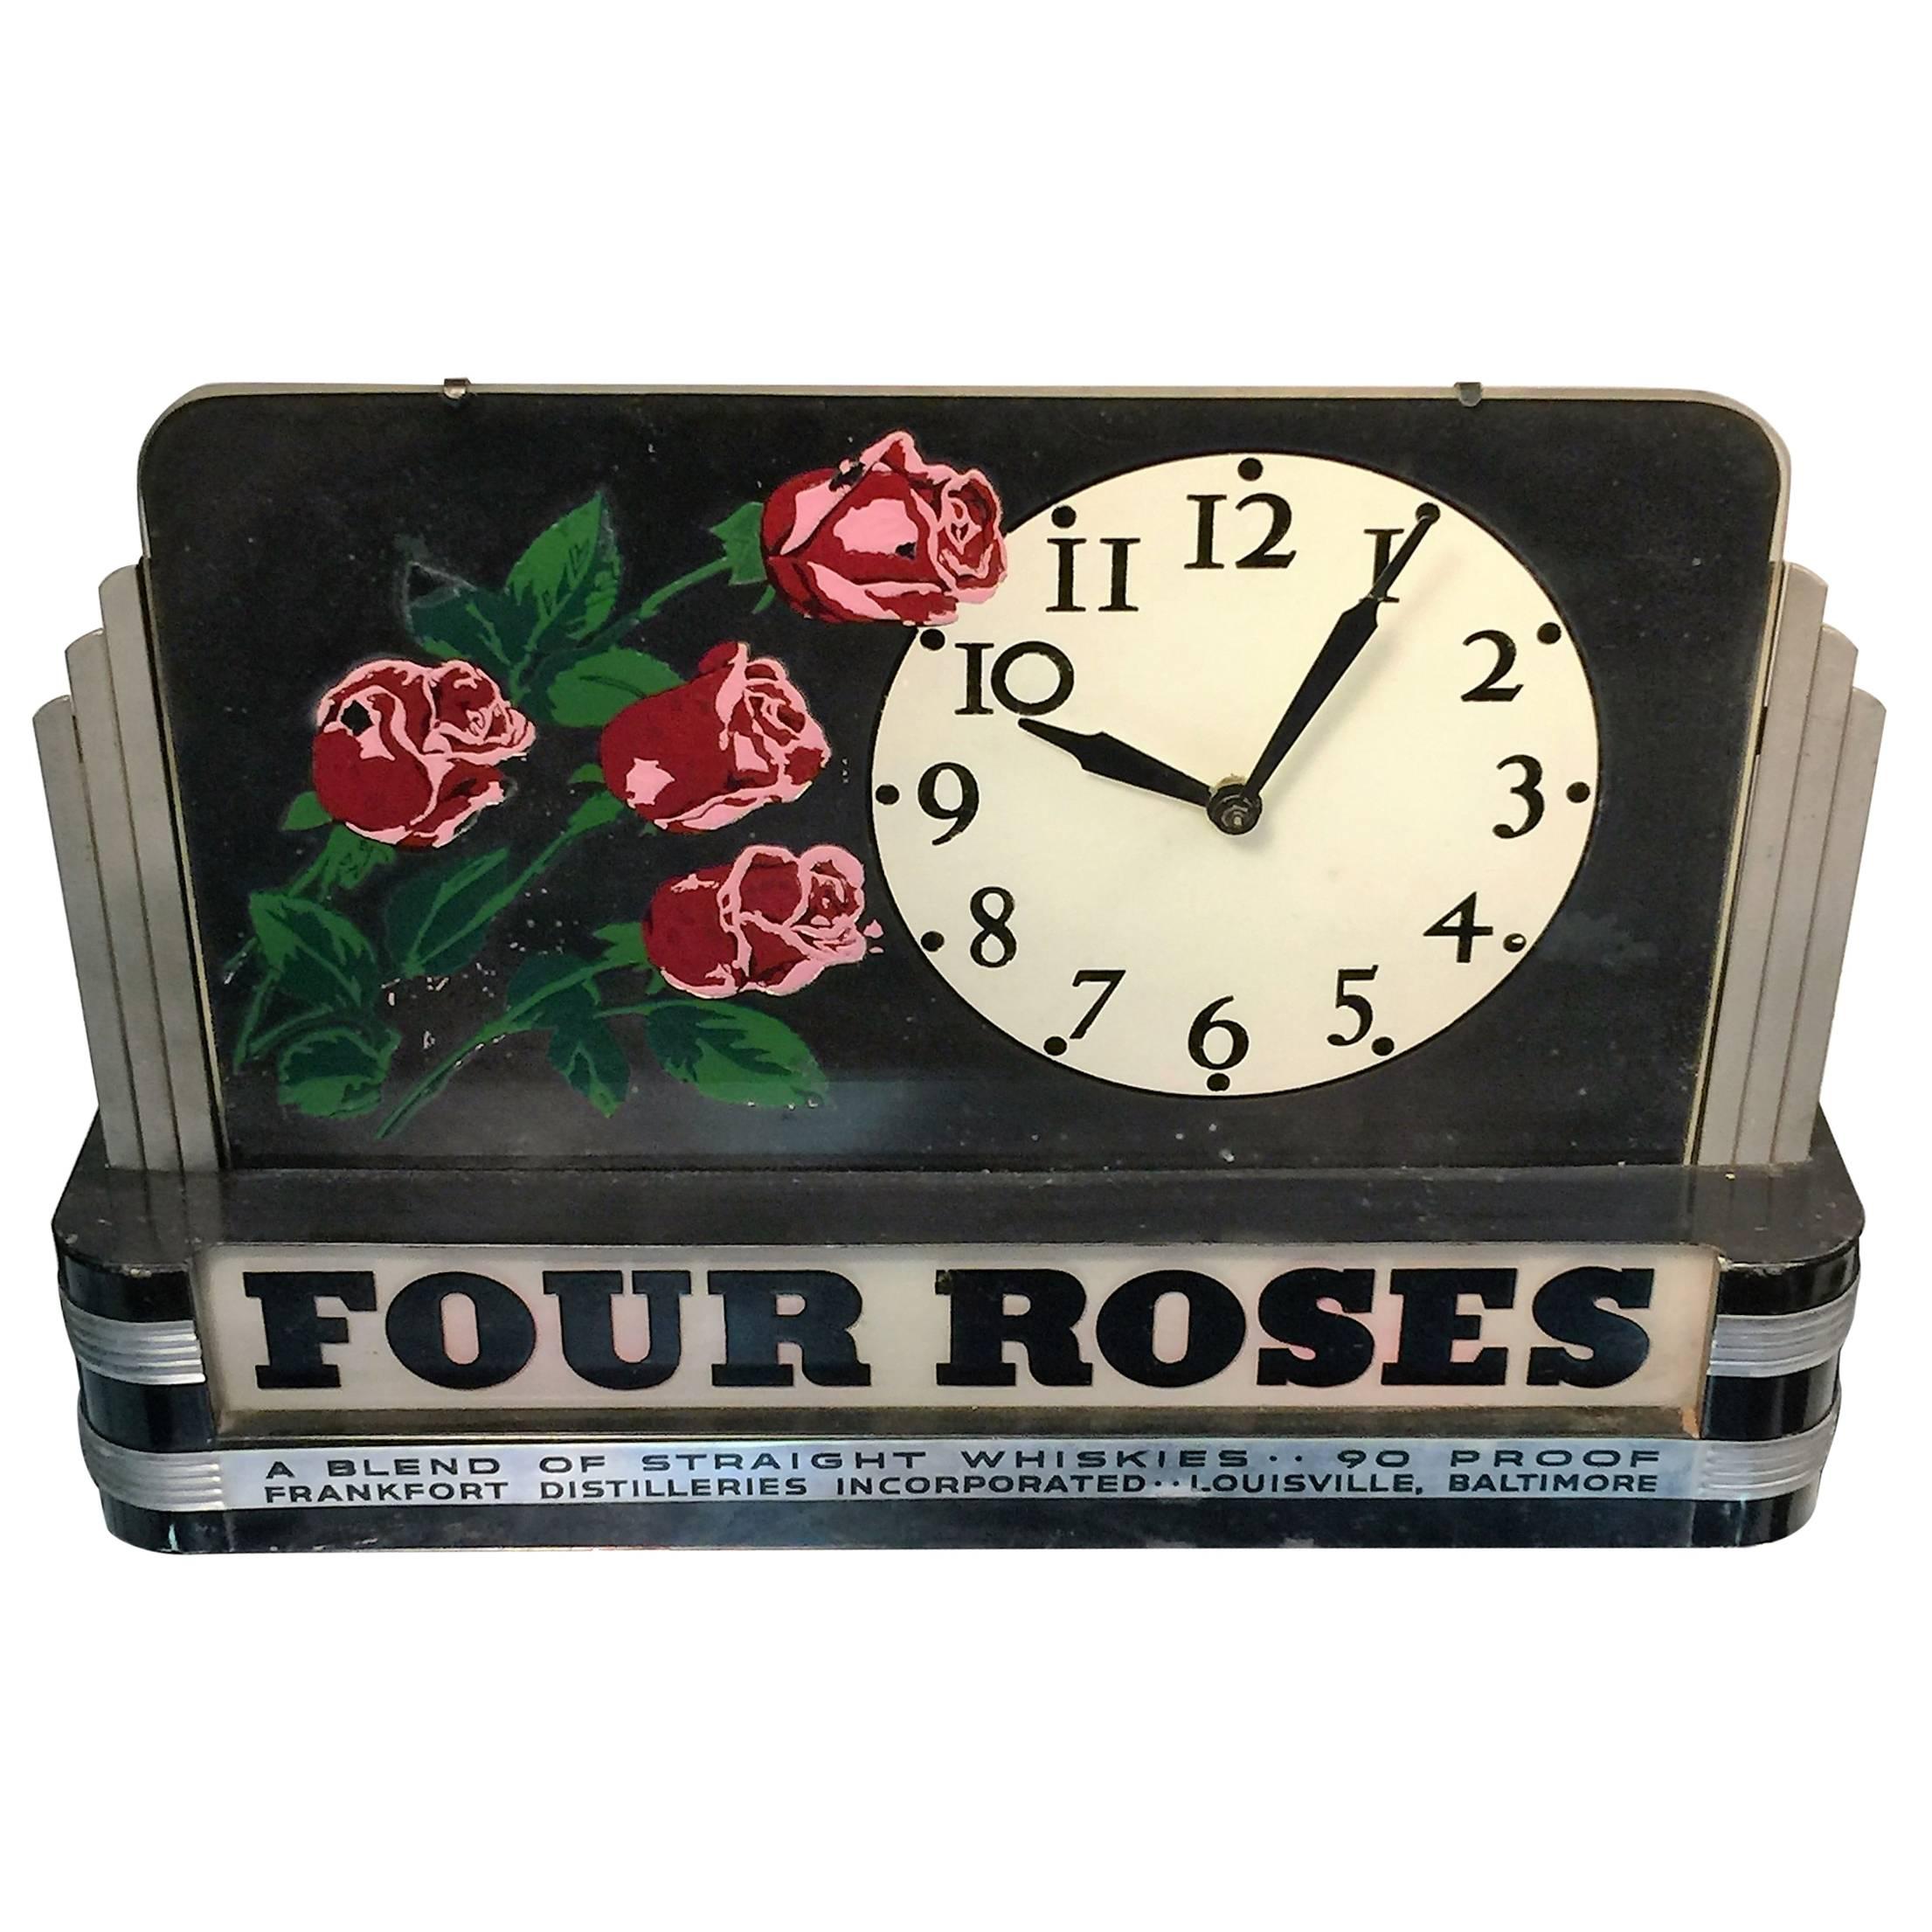  Lovely Illuminated Art Deco Four Roses Advertising Clock For Sale